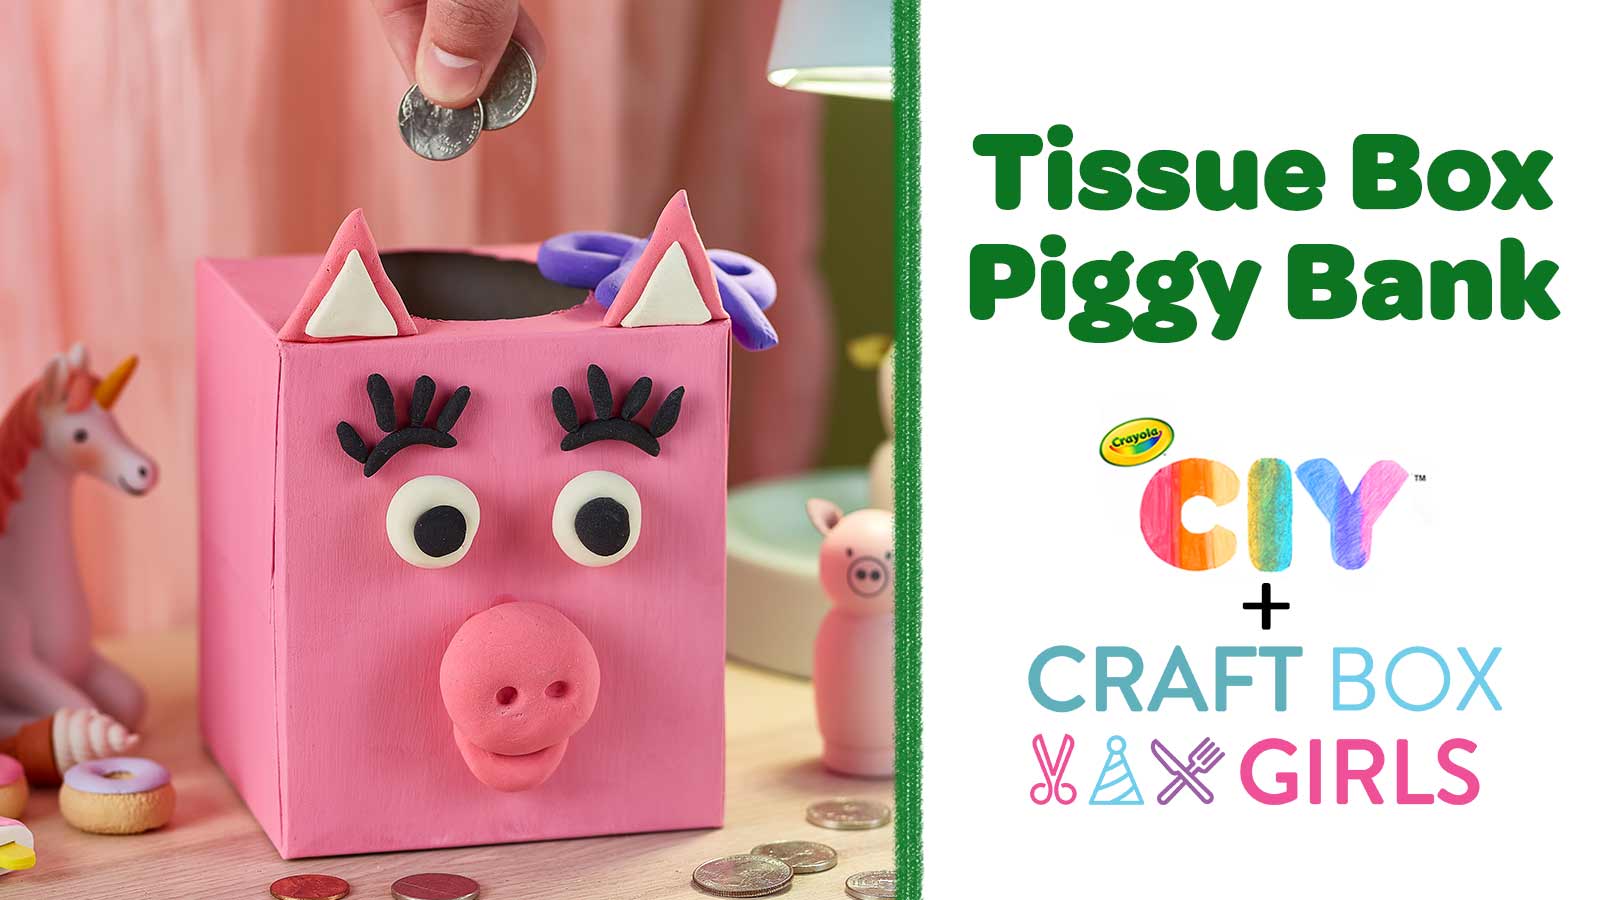 Tissue Box Diy Piggy Bank Crafts Crayola Com Ciy For Kids And S